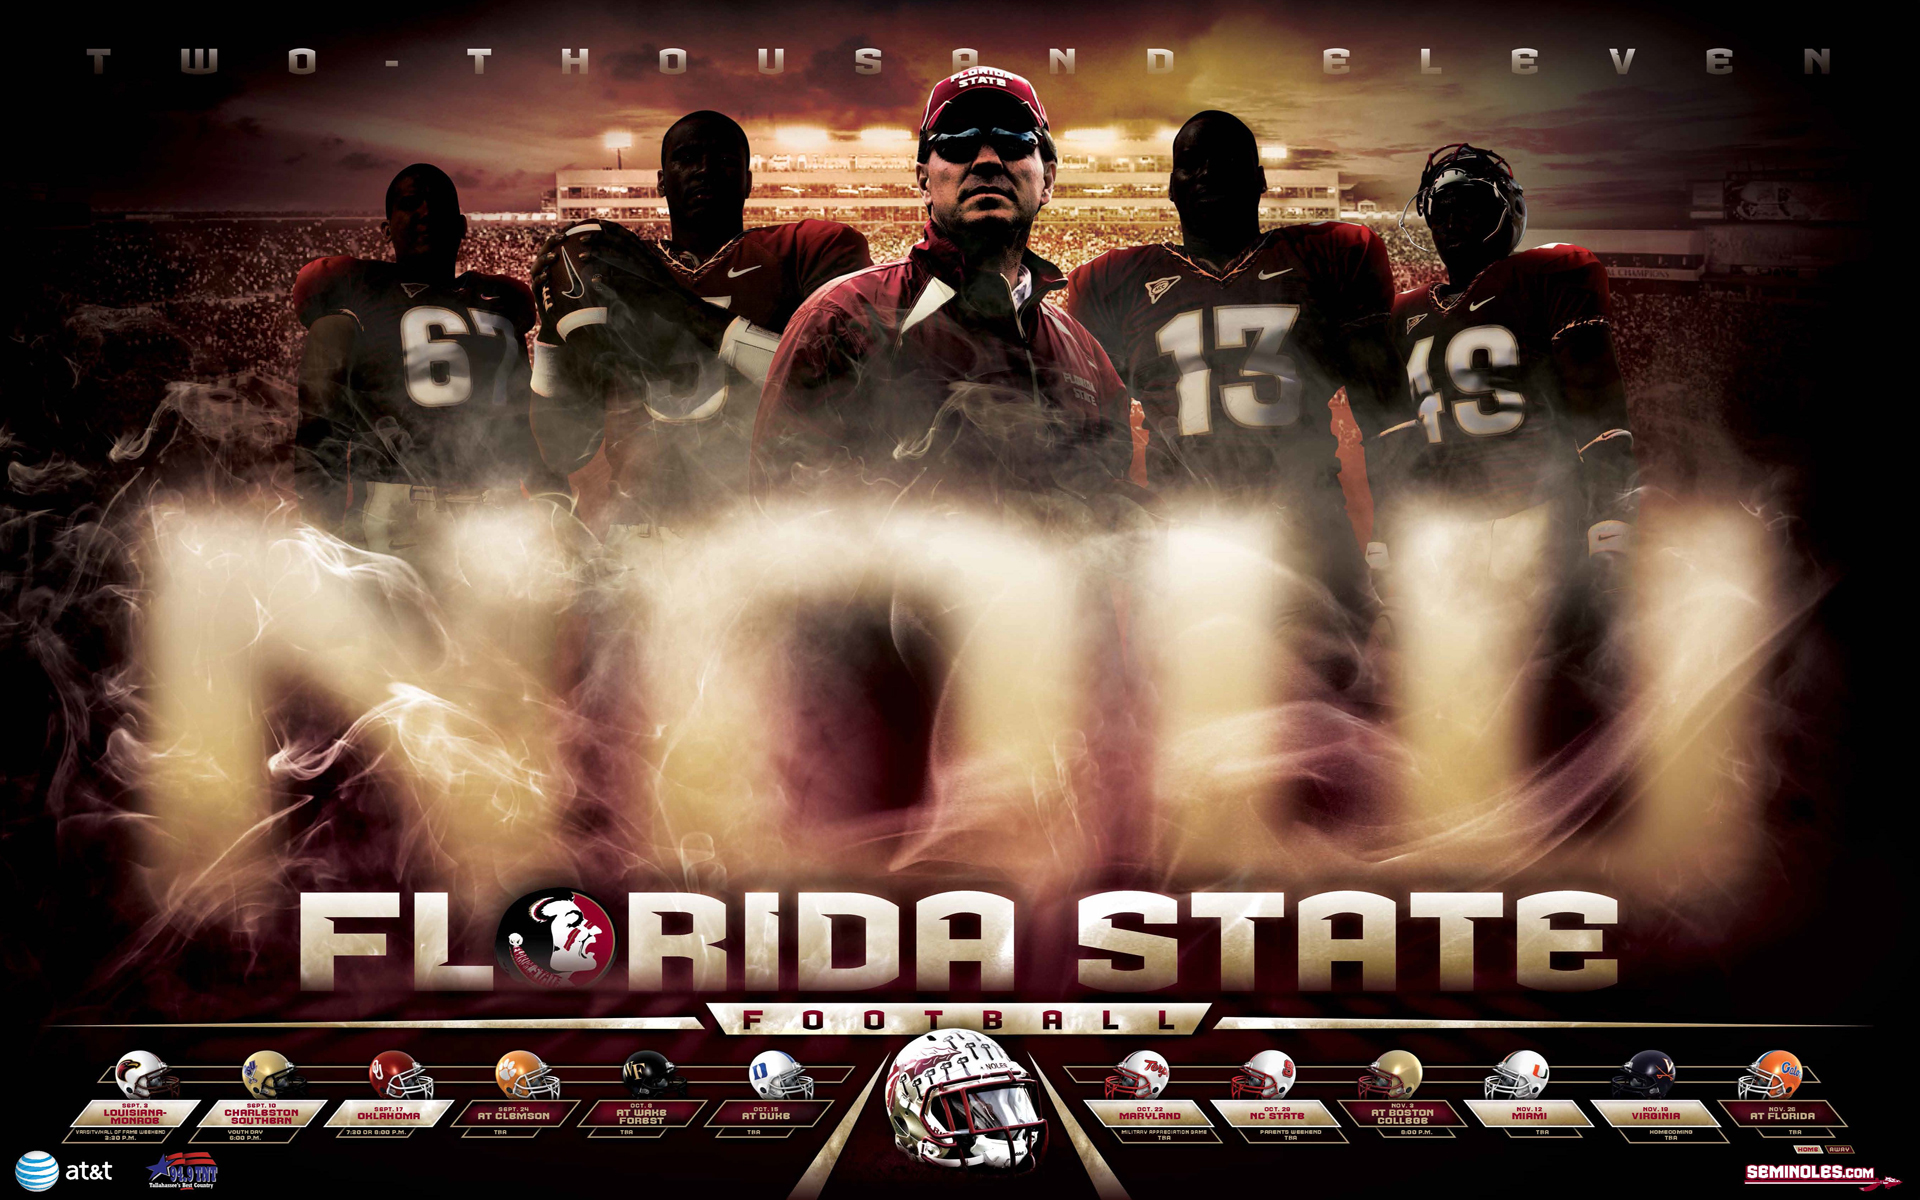 FORIDA STATE SEMINOLES college football 1 wallpaper background